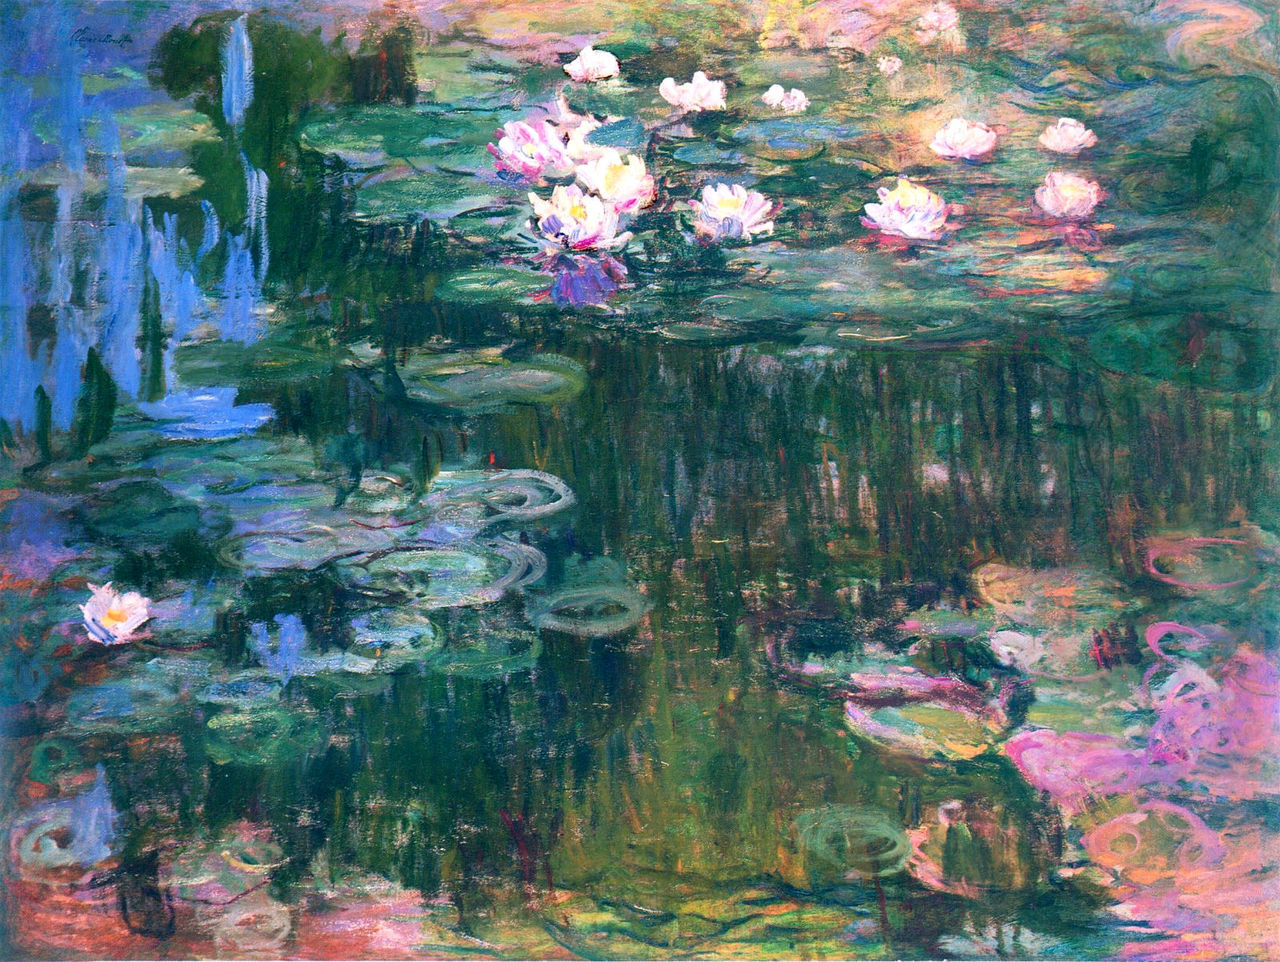   Water Lilies, Claude Monet